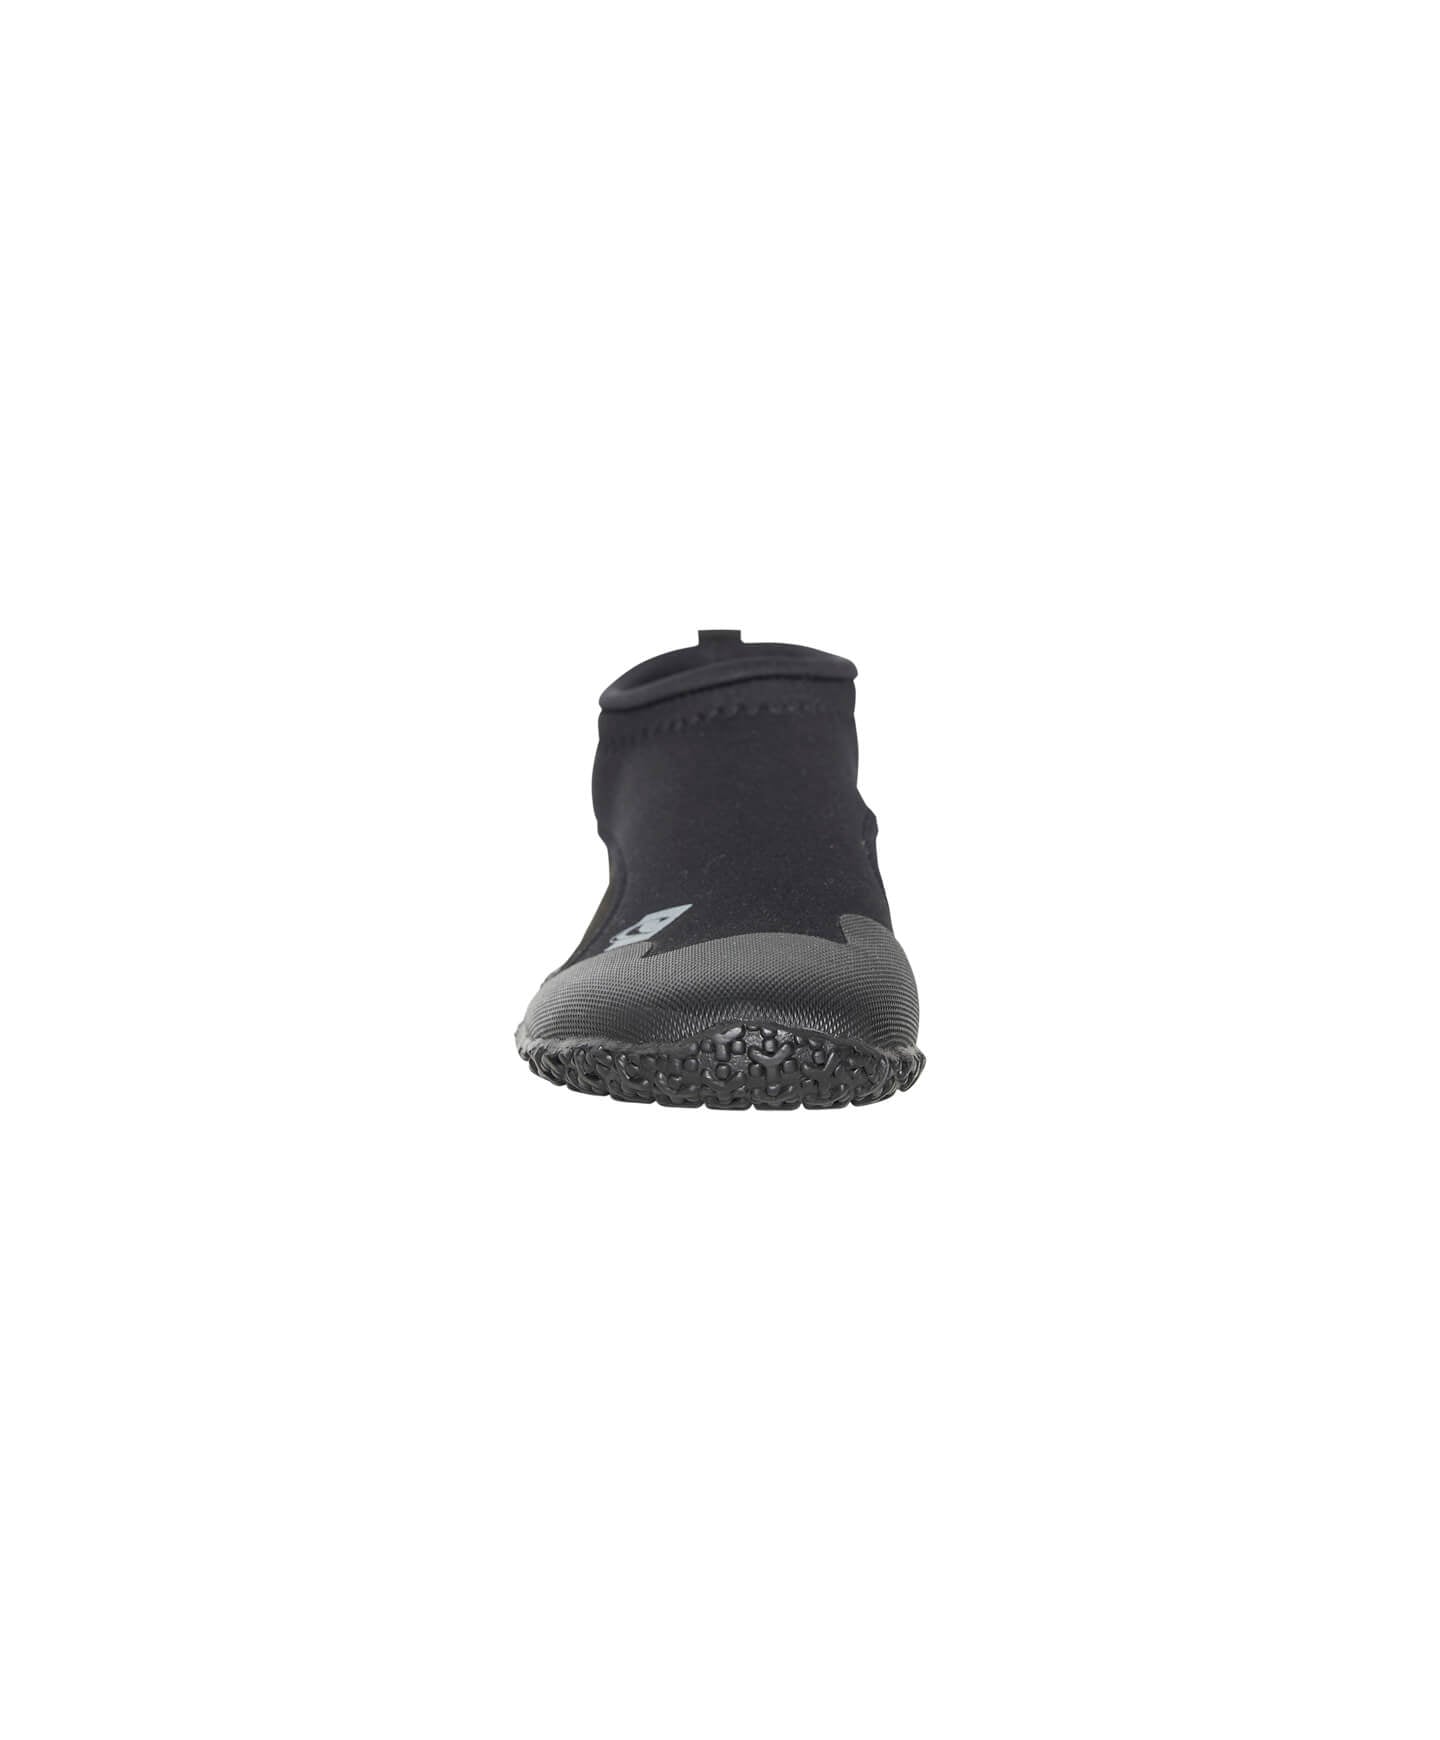 Reactor Reef Wetsuit Boot - Black